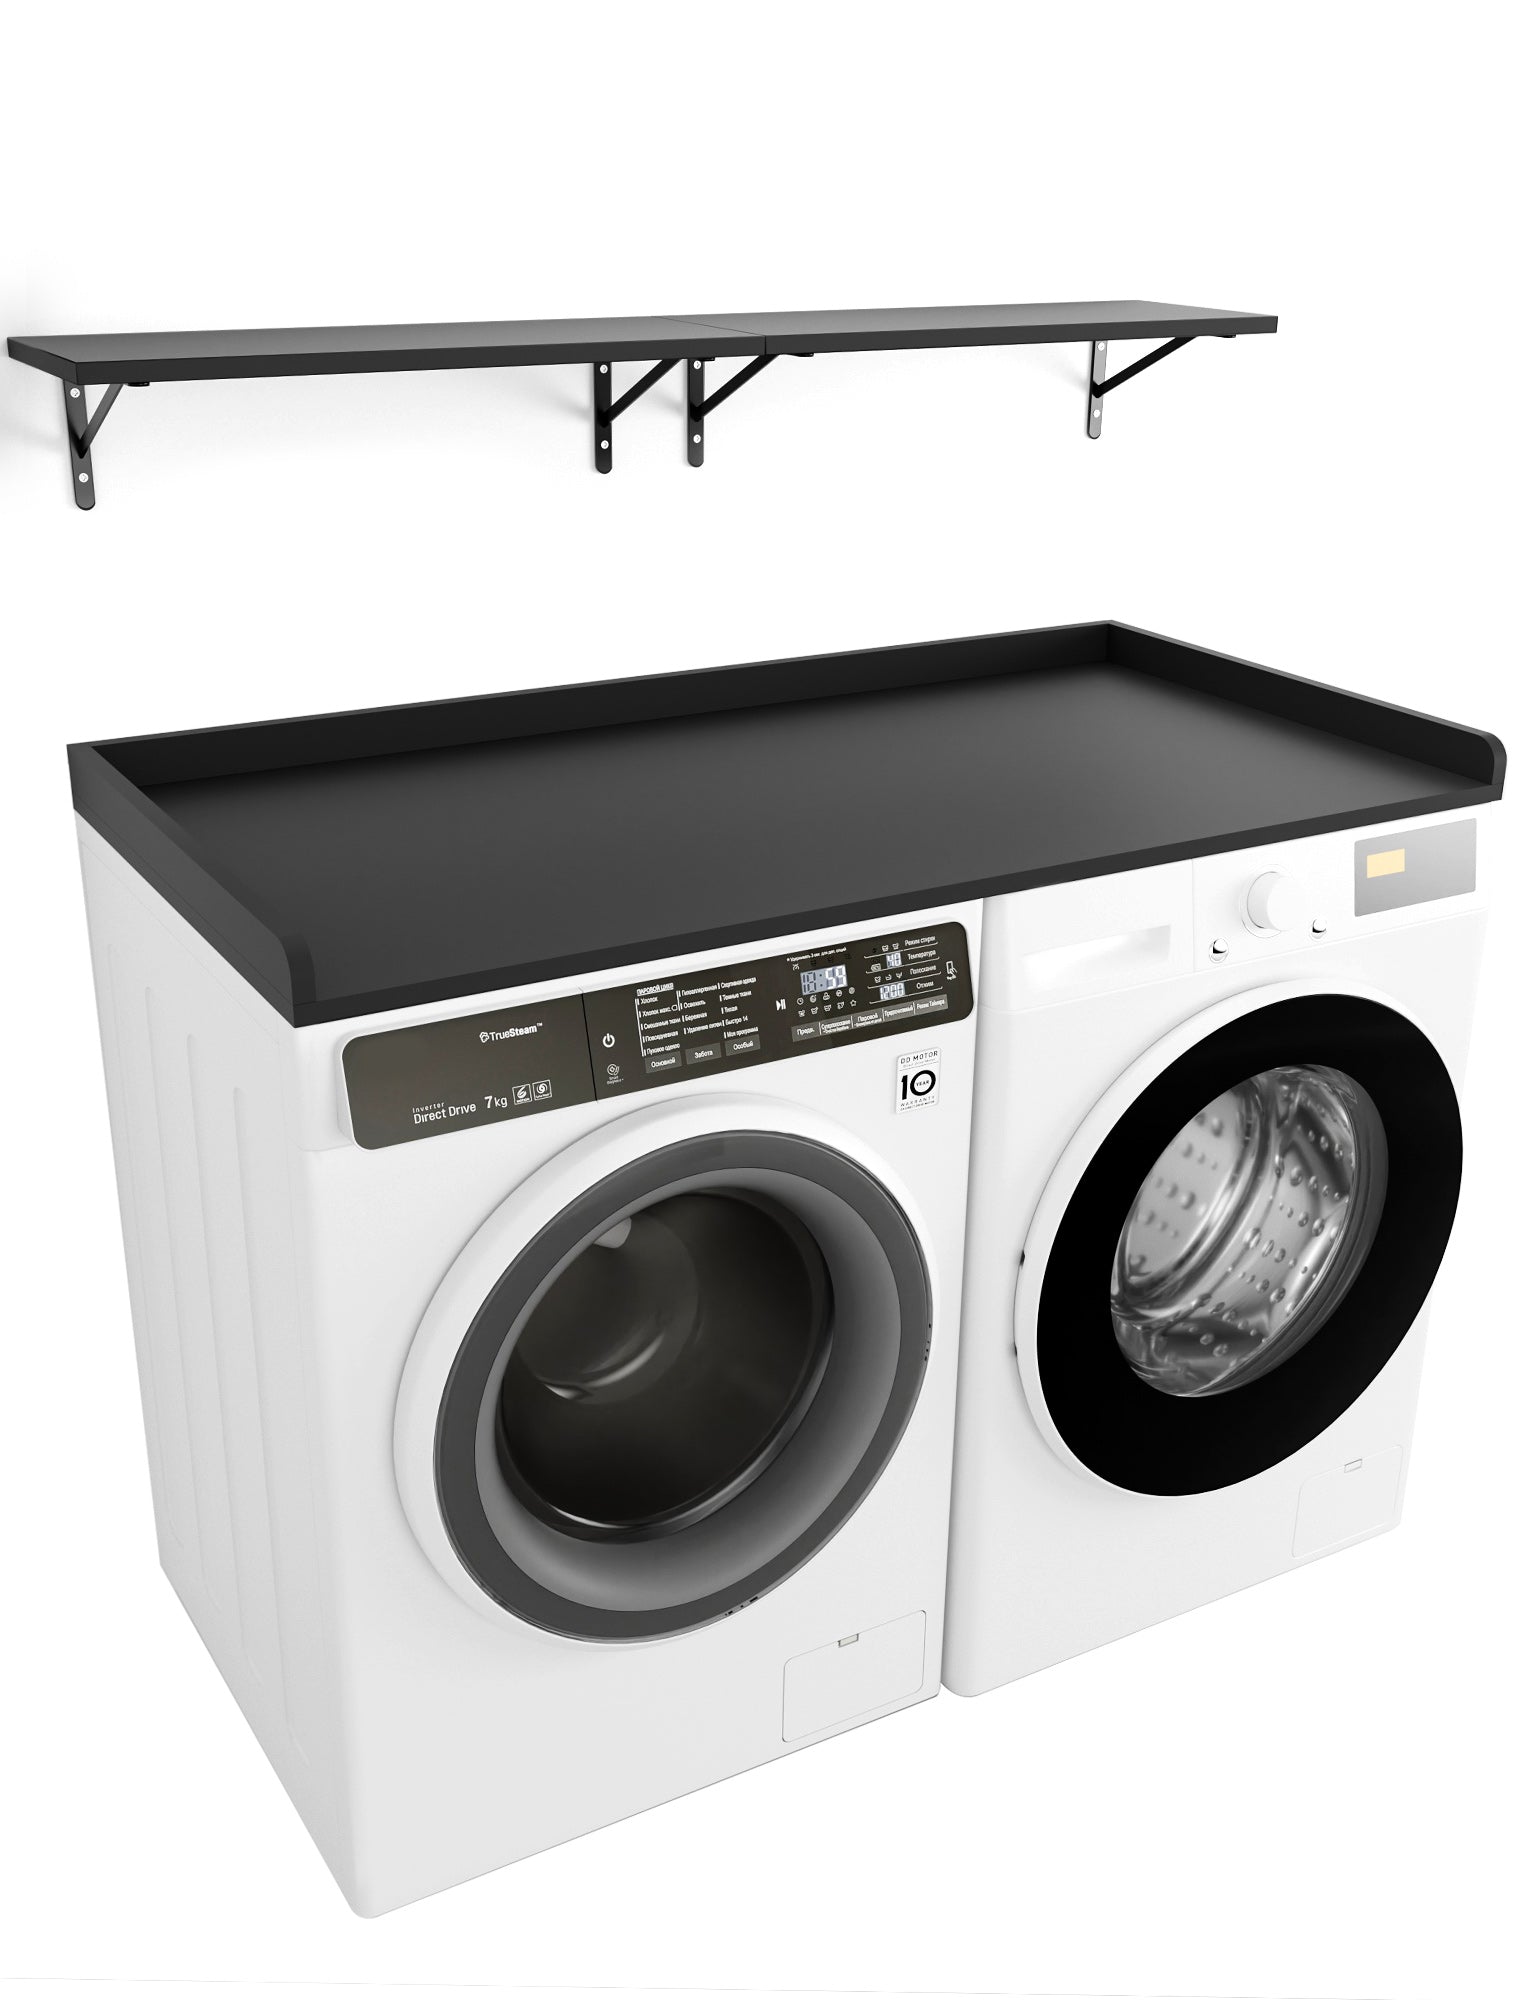 Kaboon Washer Dryer Countertop, Black